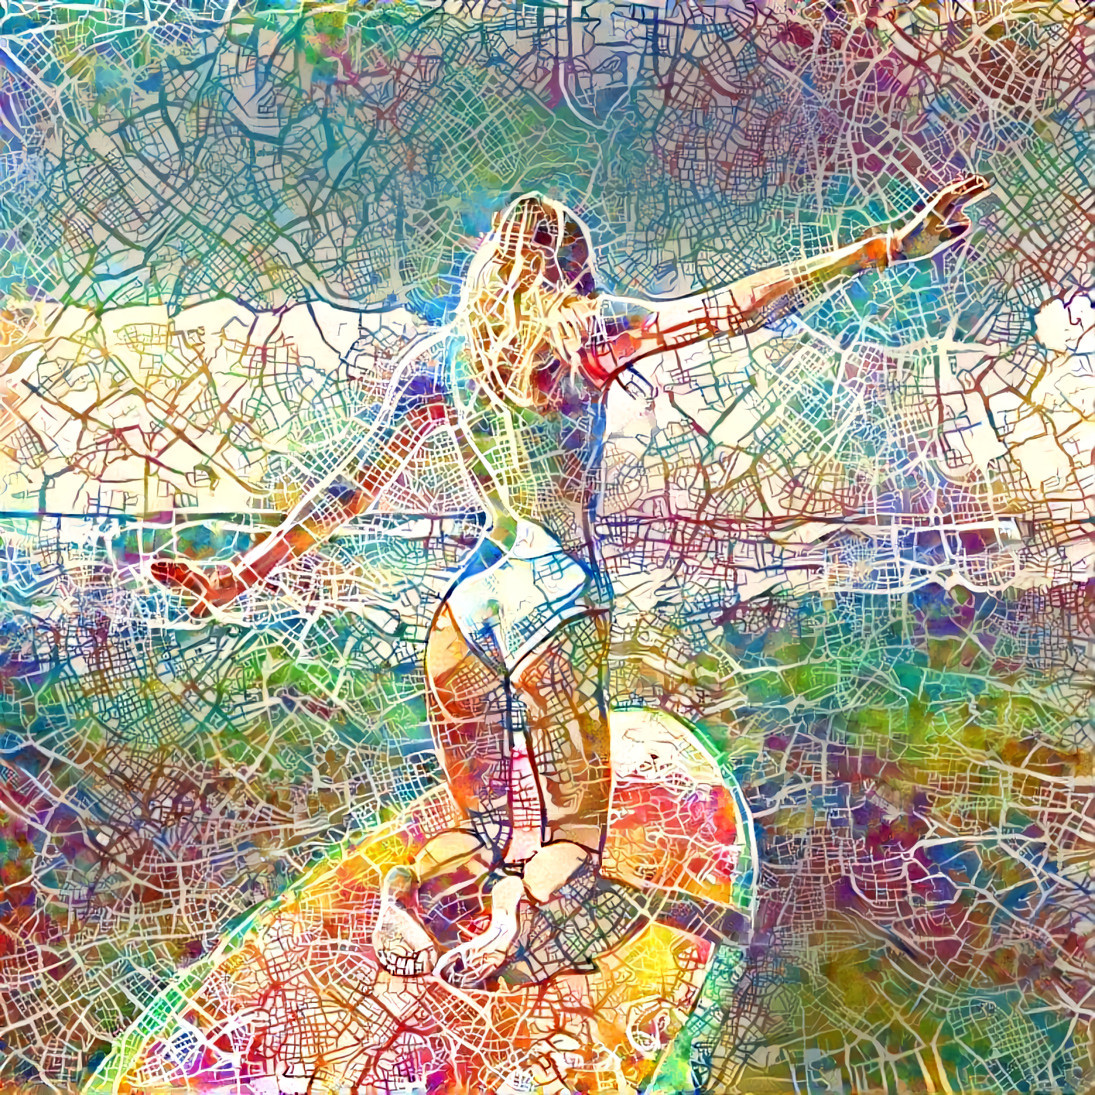 model balancing on knees, on surf board, drawing